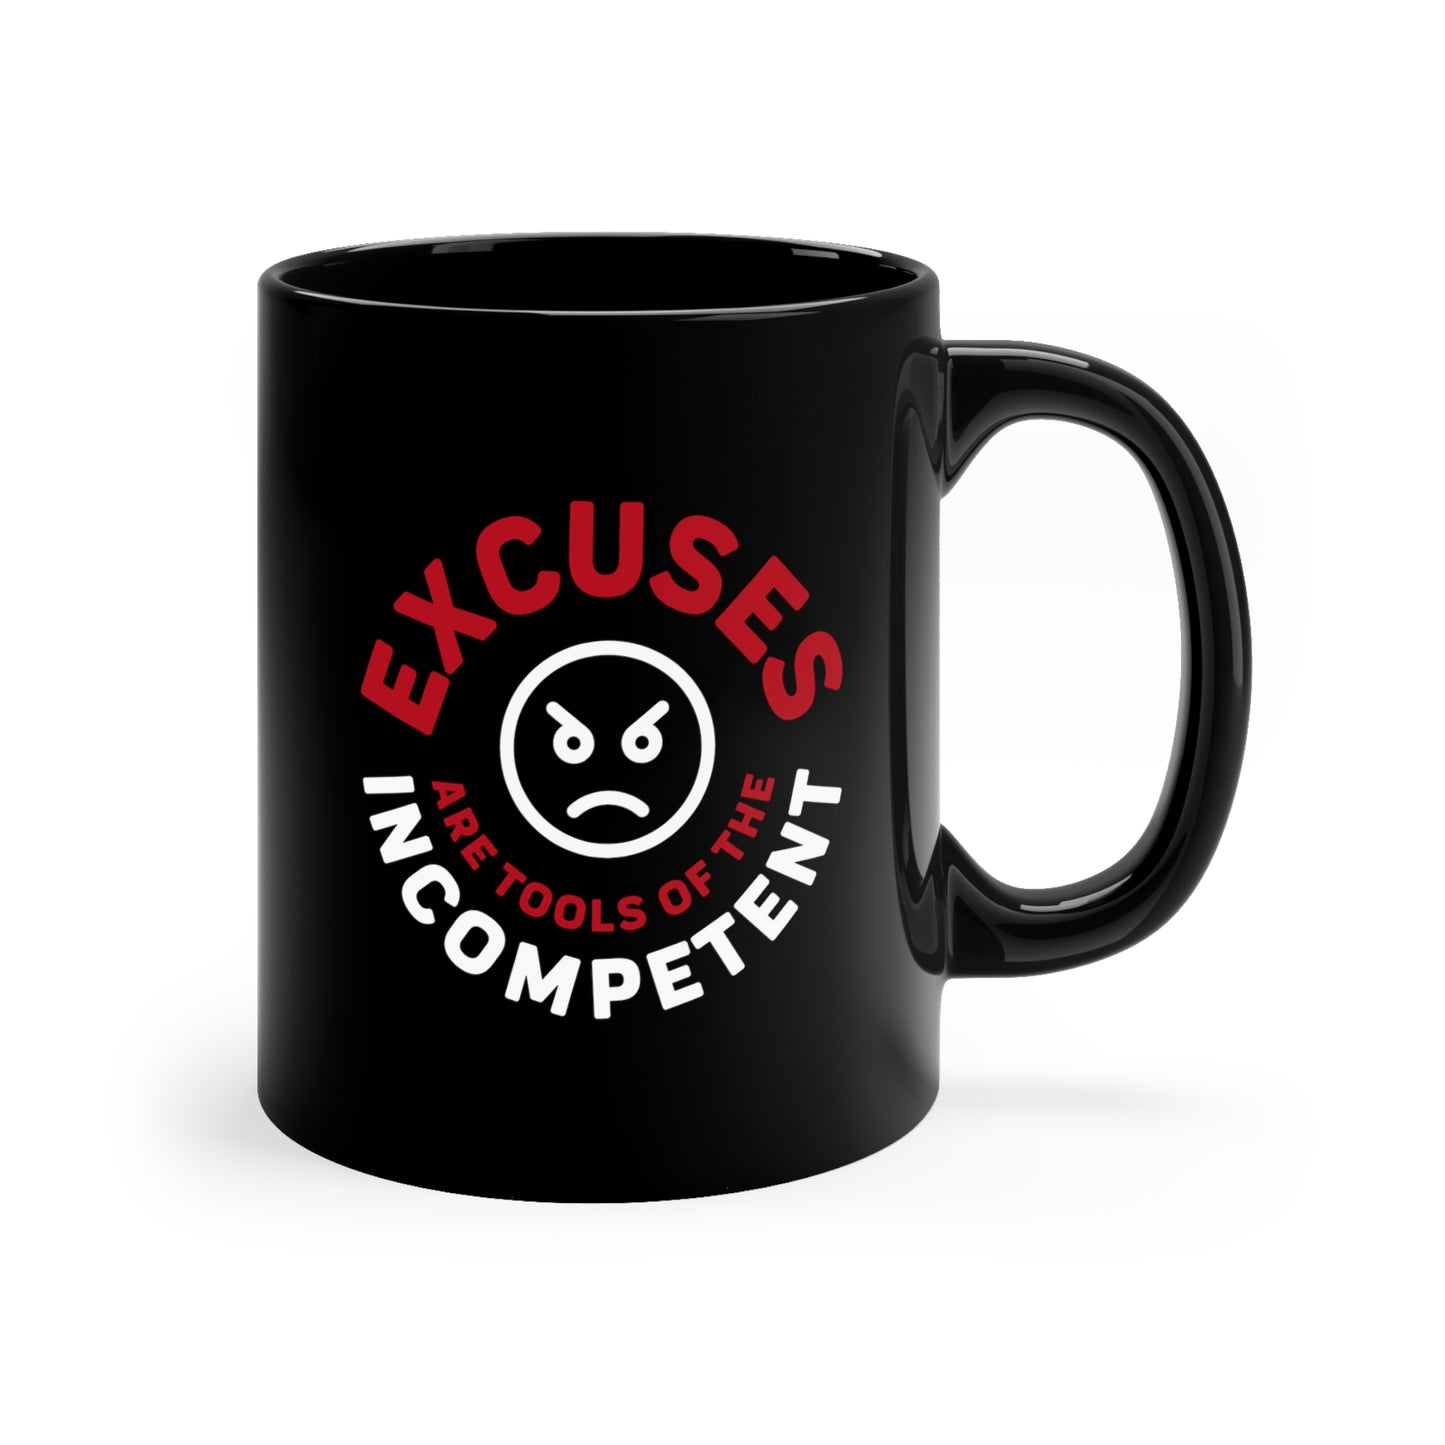 Excuses Mug - Red + White on Black